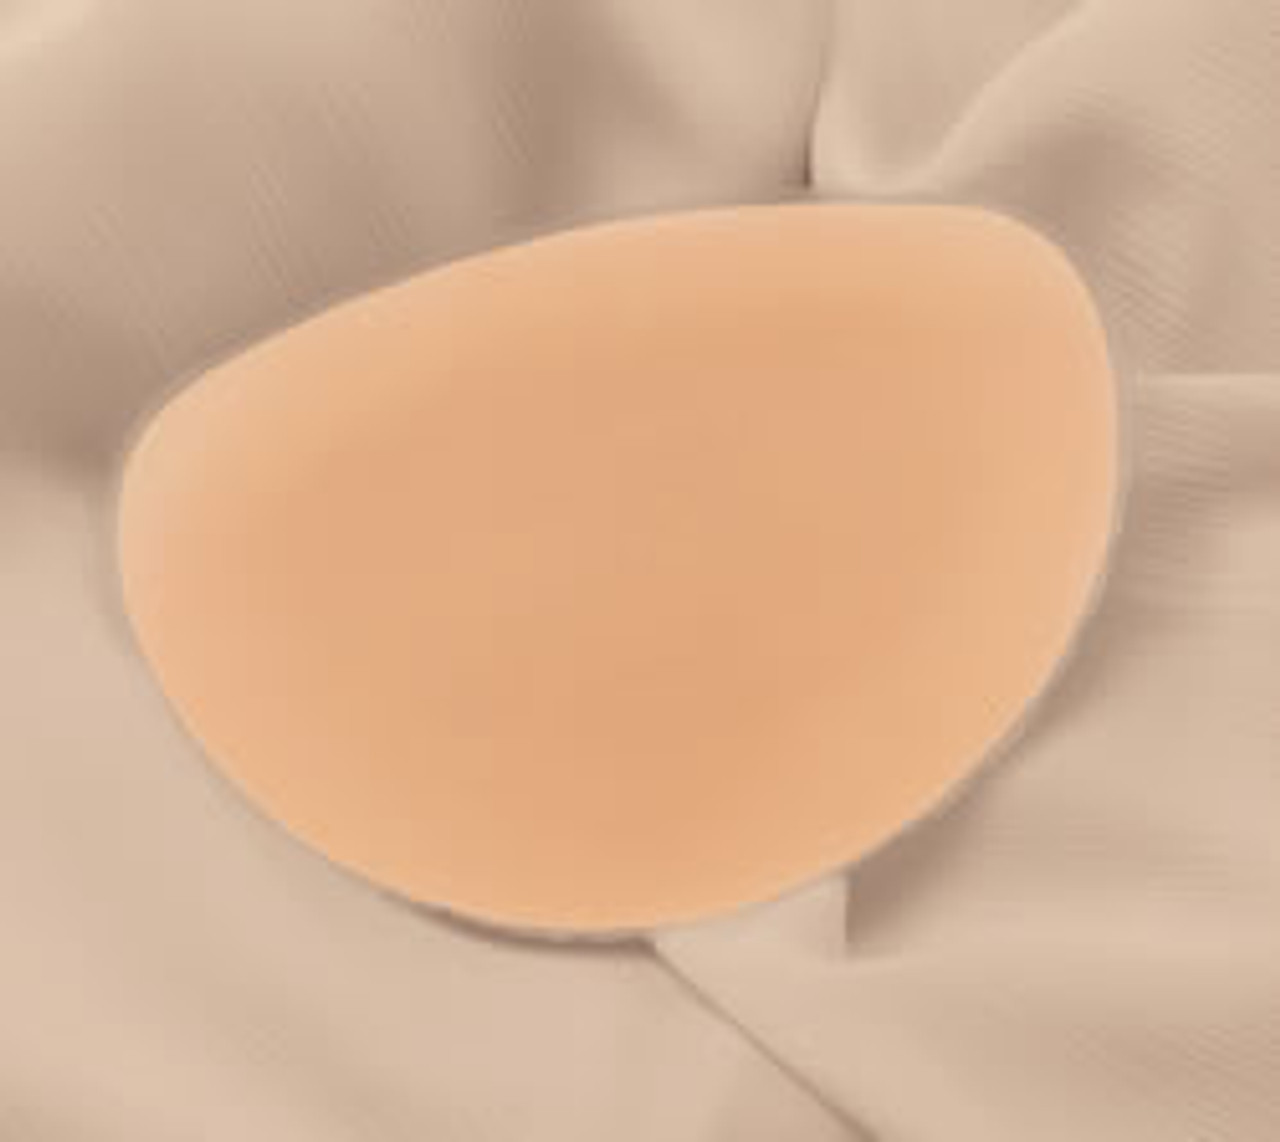 Transform Premier Semi-Round Breast Forms #99 (Pair)